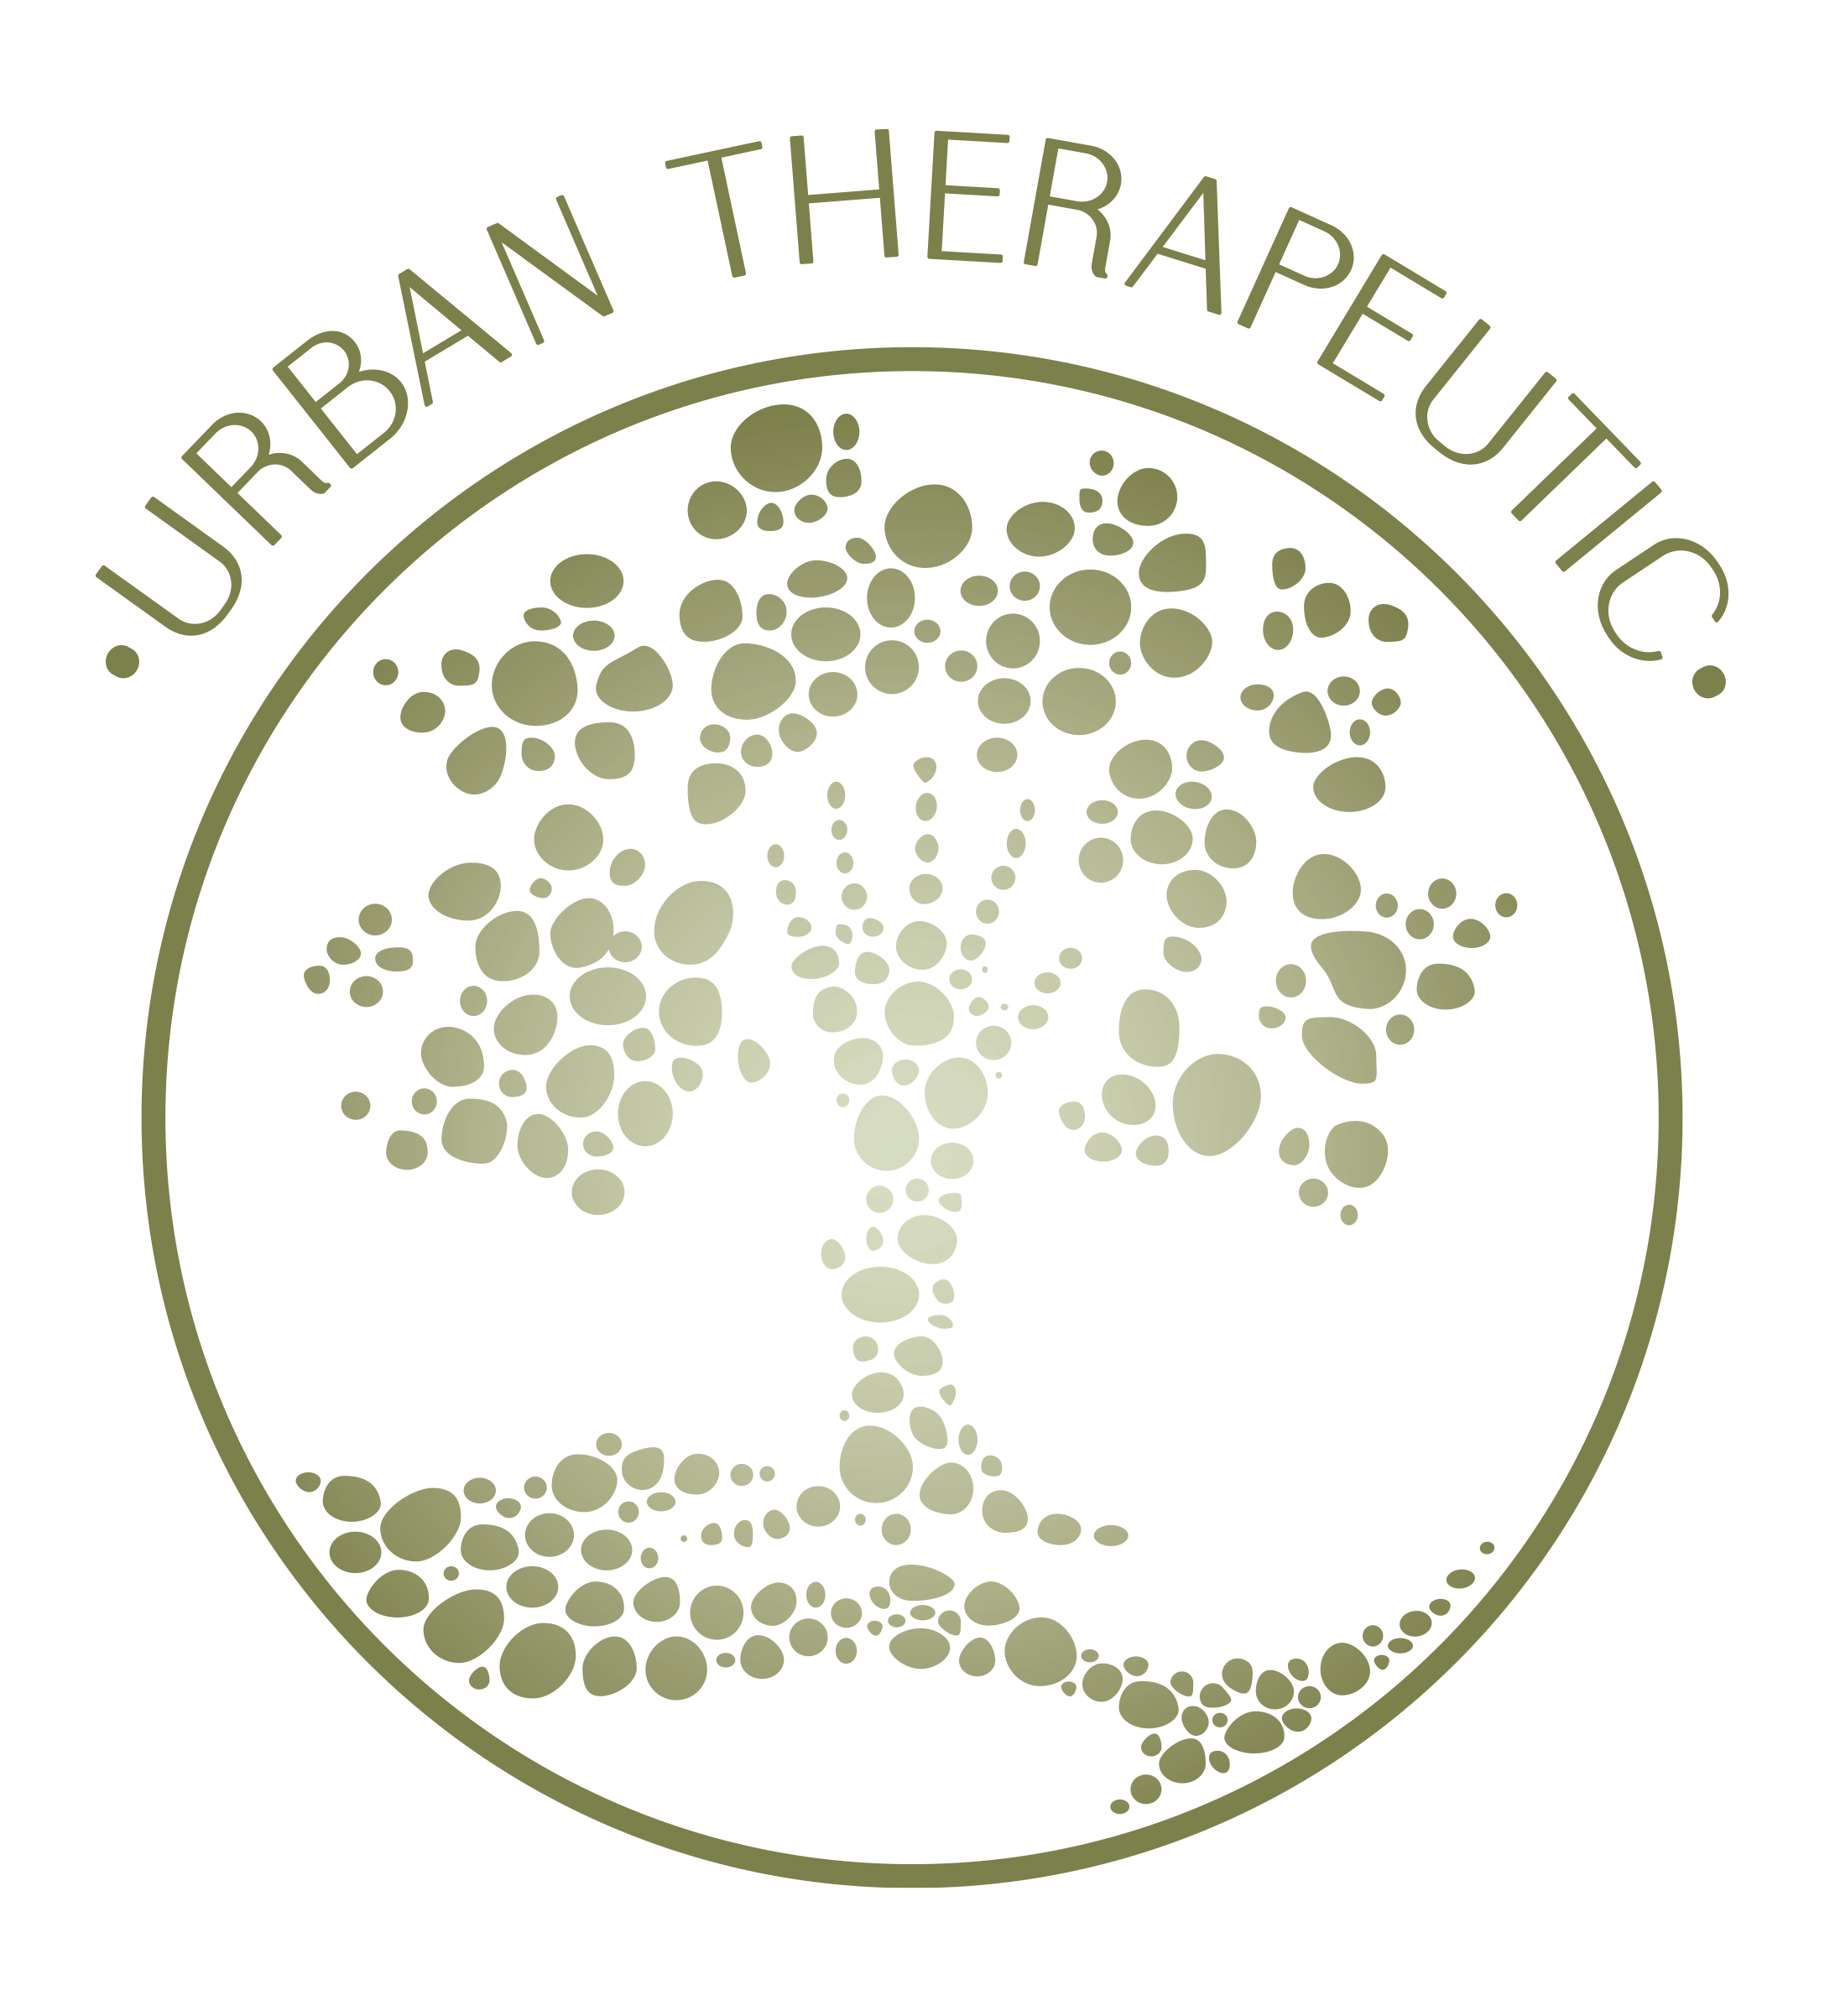 Urban Therapeutic